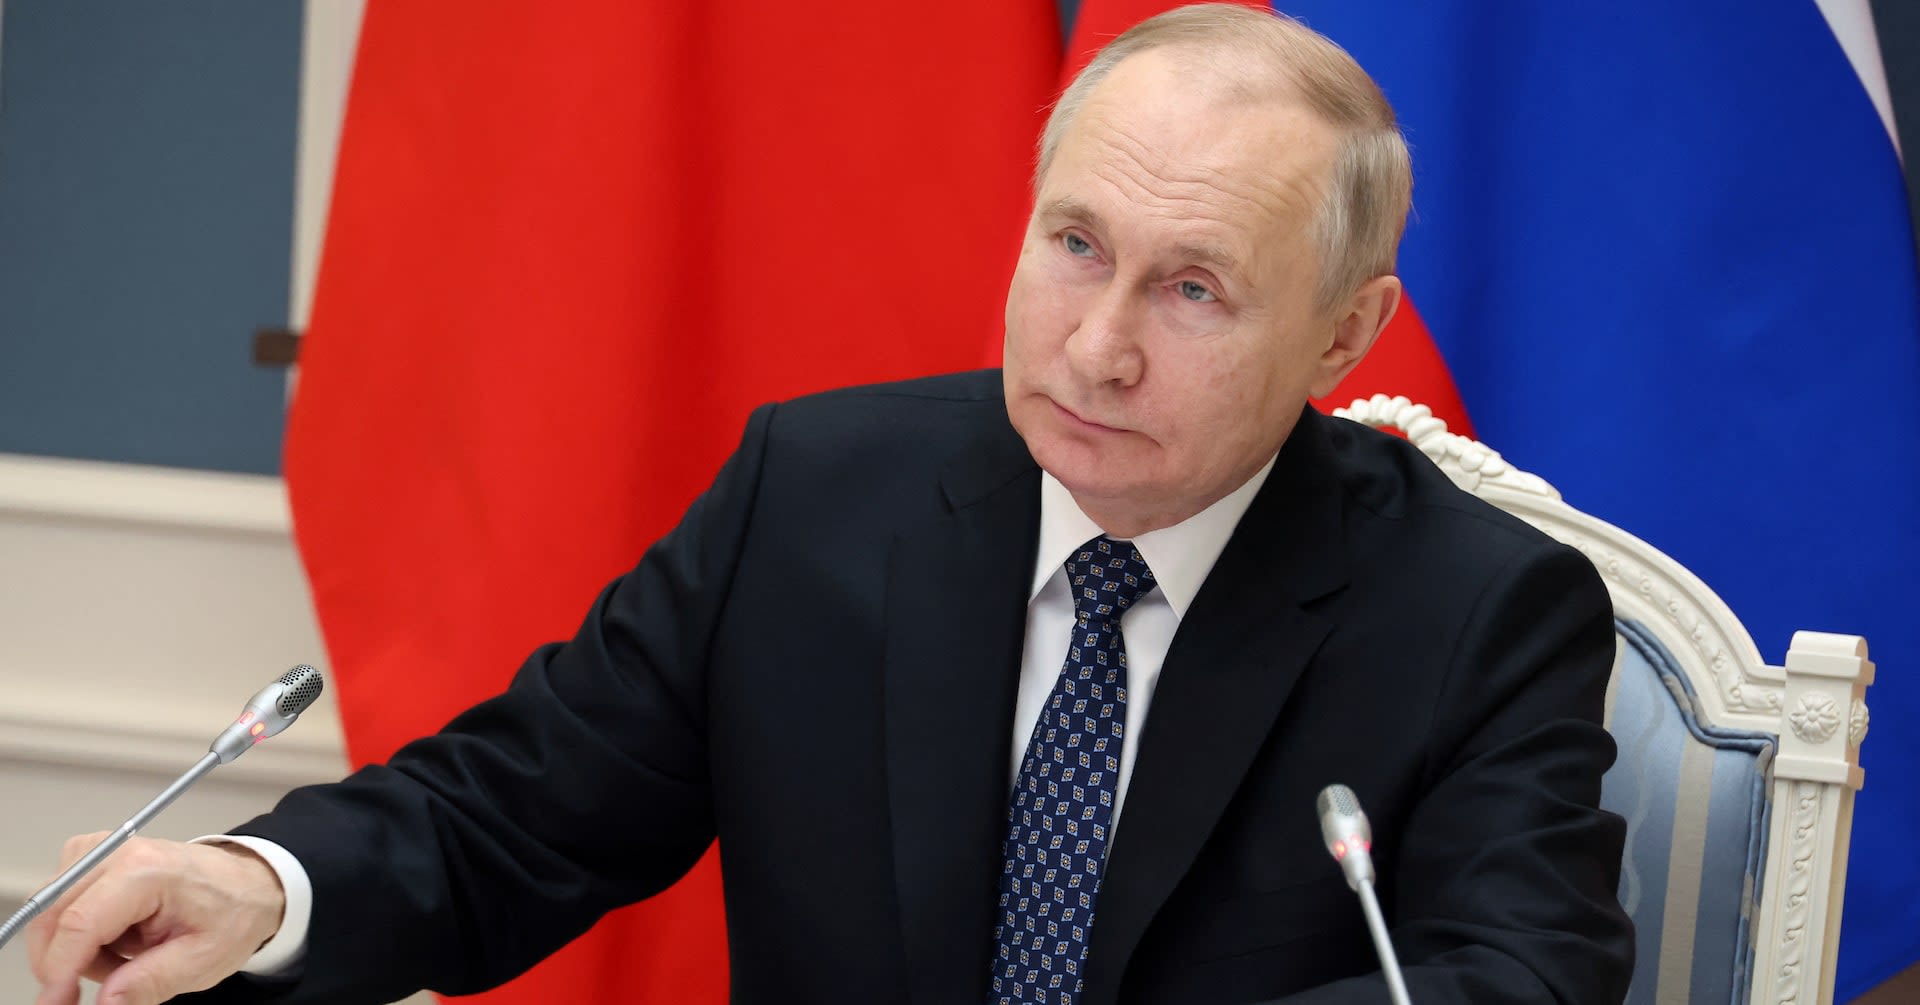 Putin to visit China May 16-17, Kremlin says